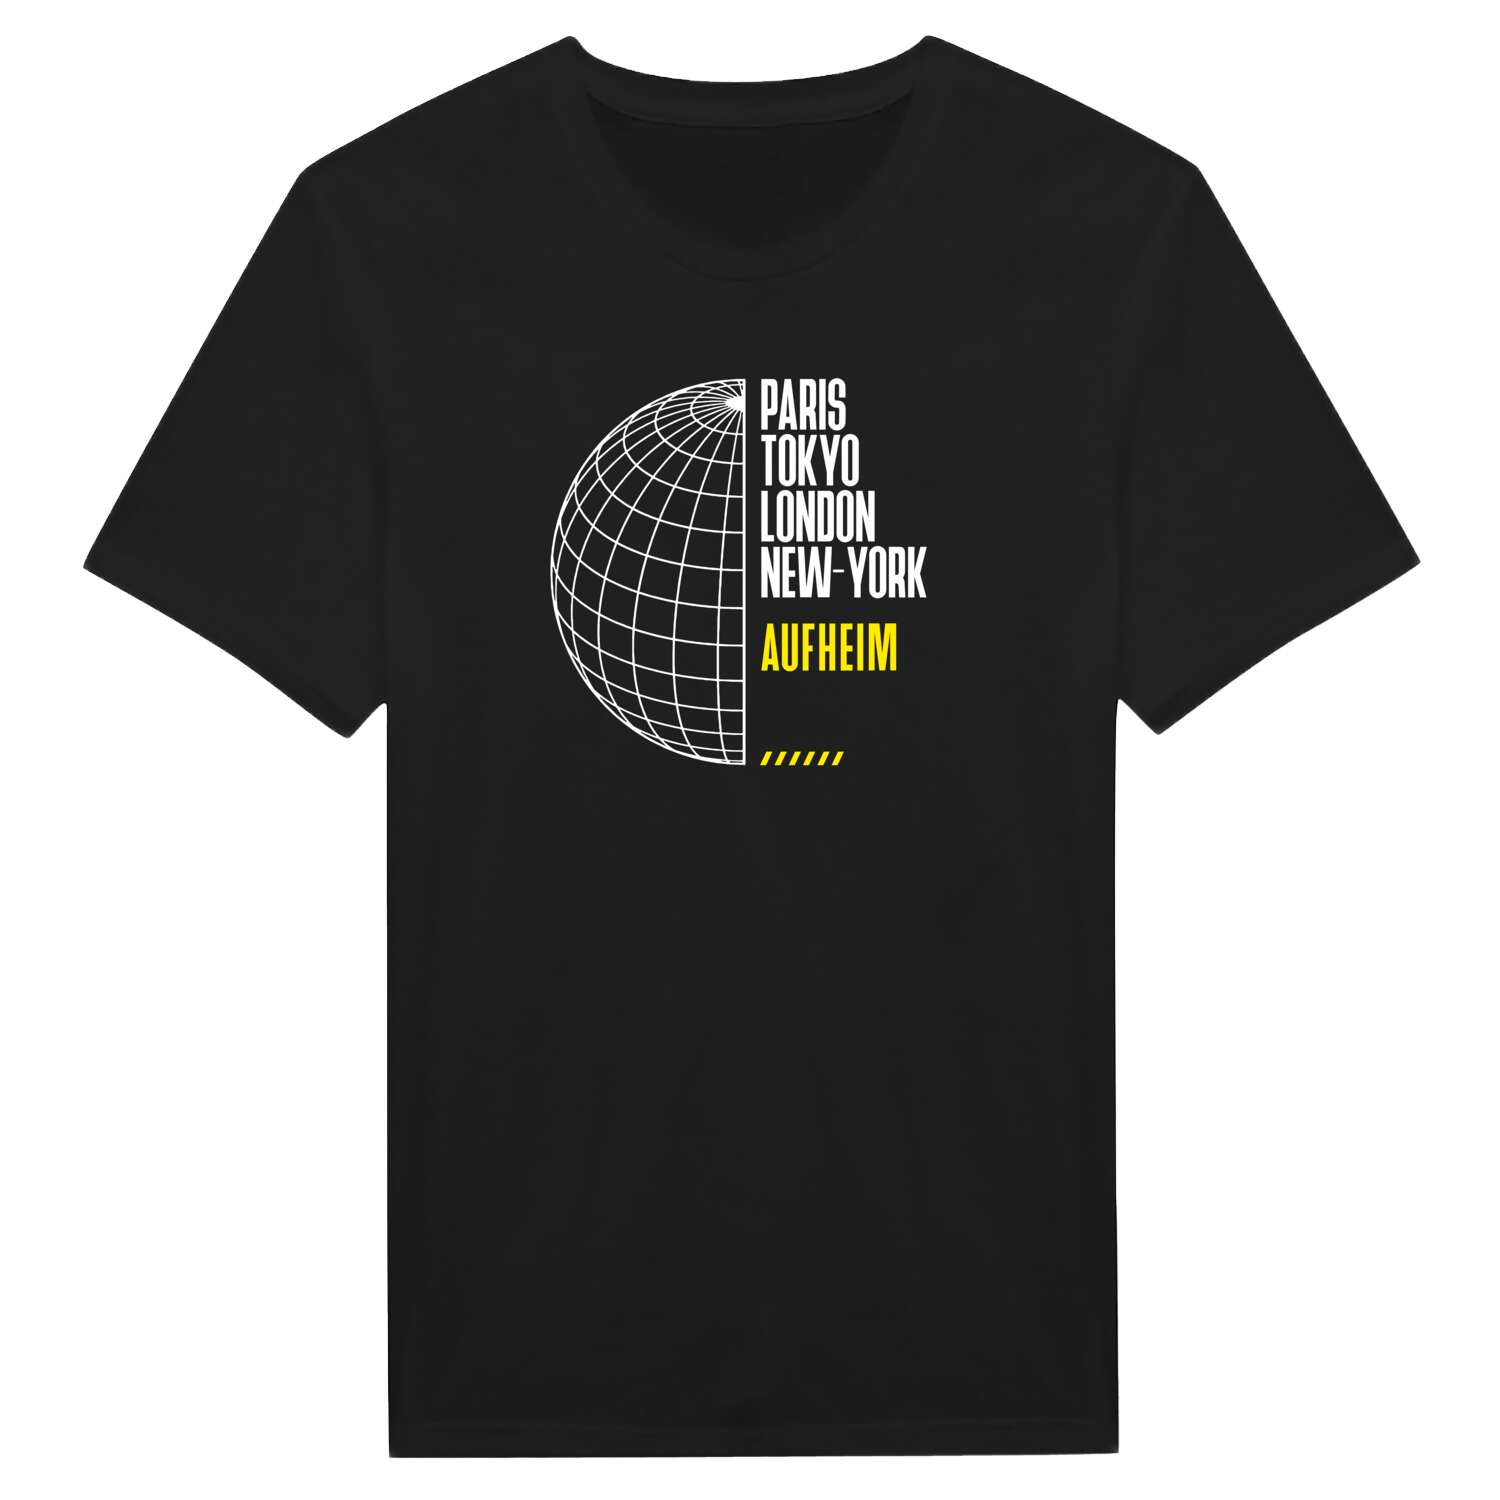 Aufheim T-Shirt »Paris Tokyo London«